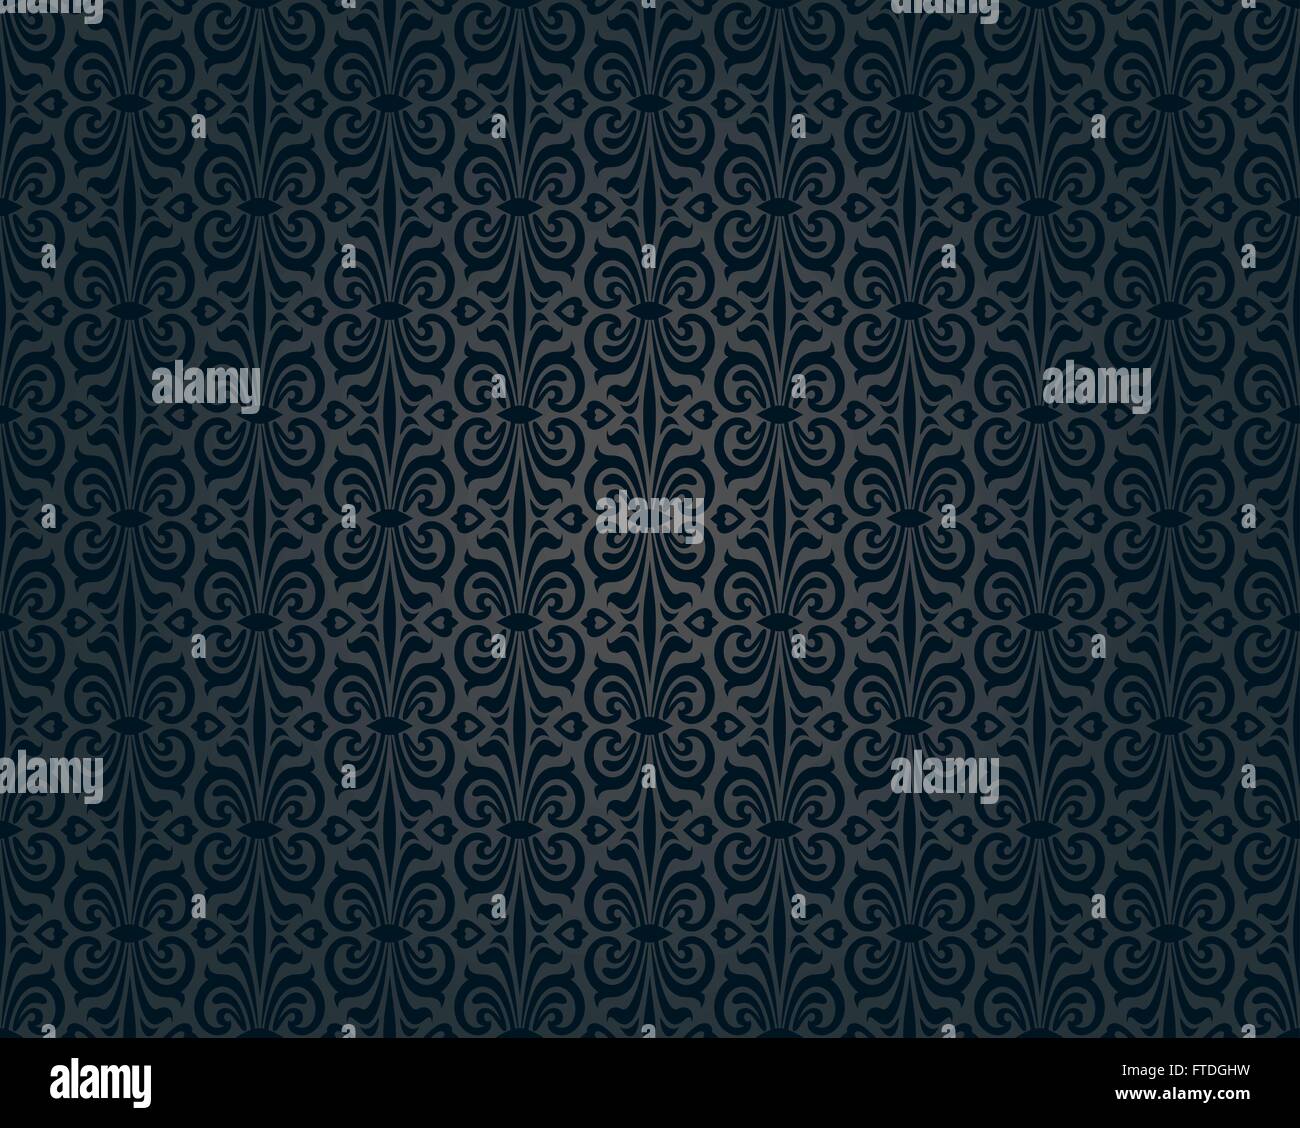 black vintage wallpaper background repetitive pattern design Stock Vector